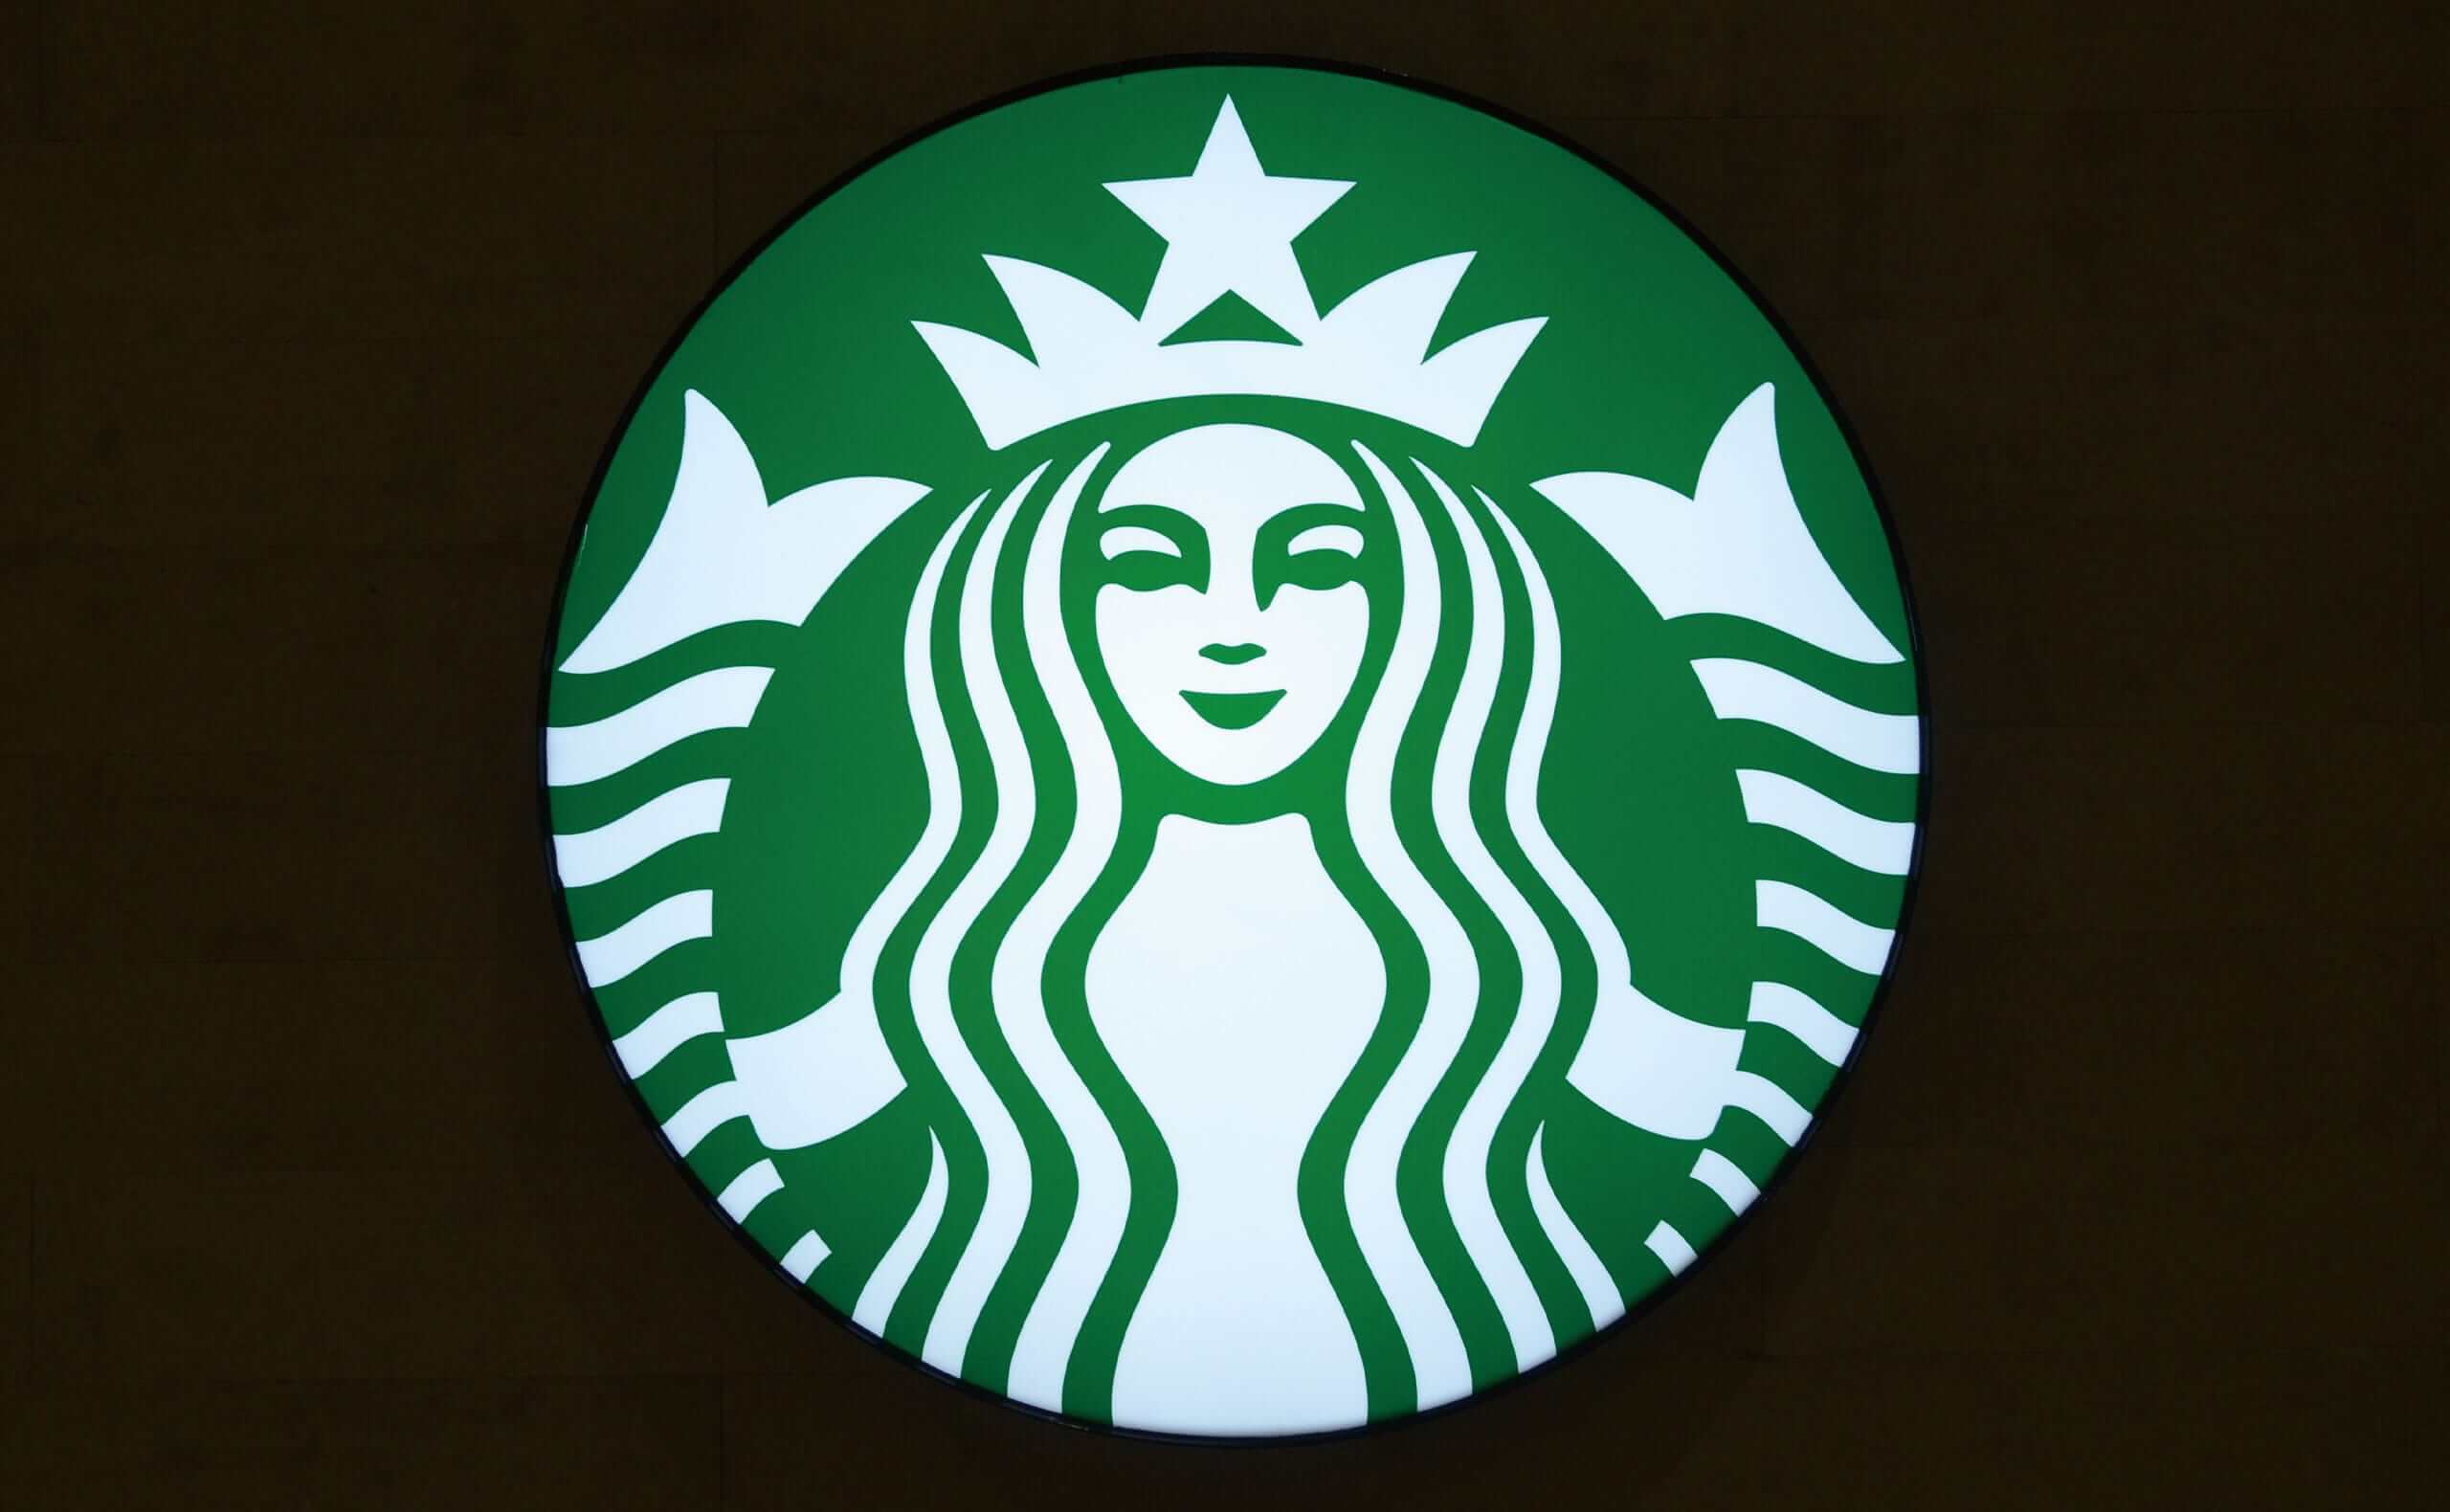 Single Sided Light Box Signs For Starbucks